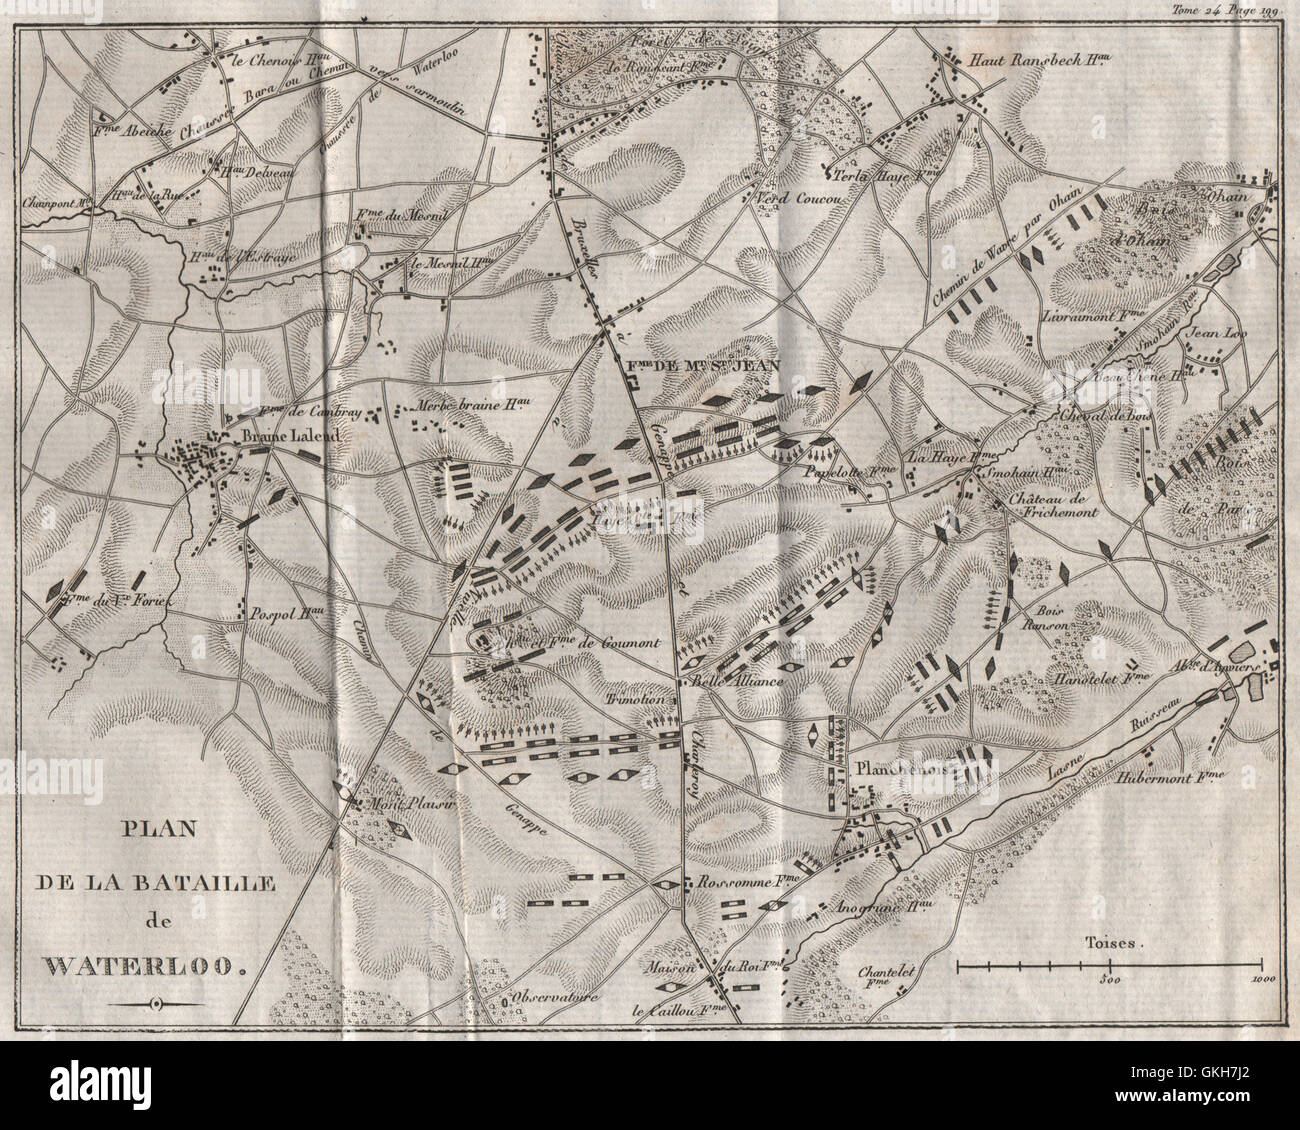 Plan of the Battle of Waterloo 1815. Belgium, 1821 antique map Stock Photo